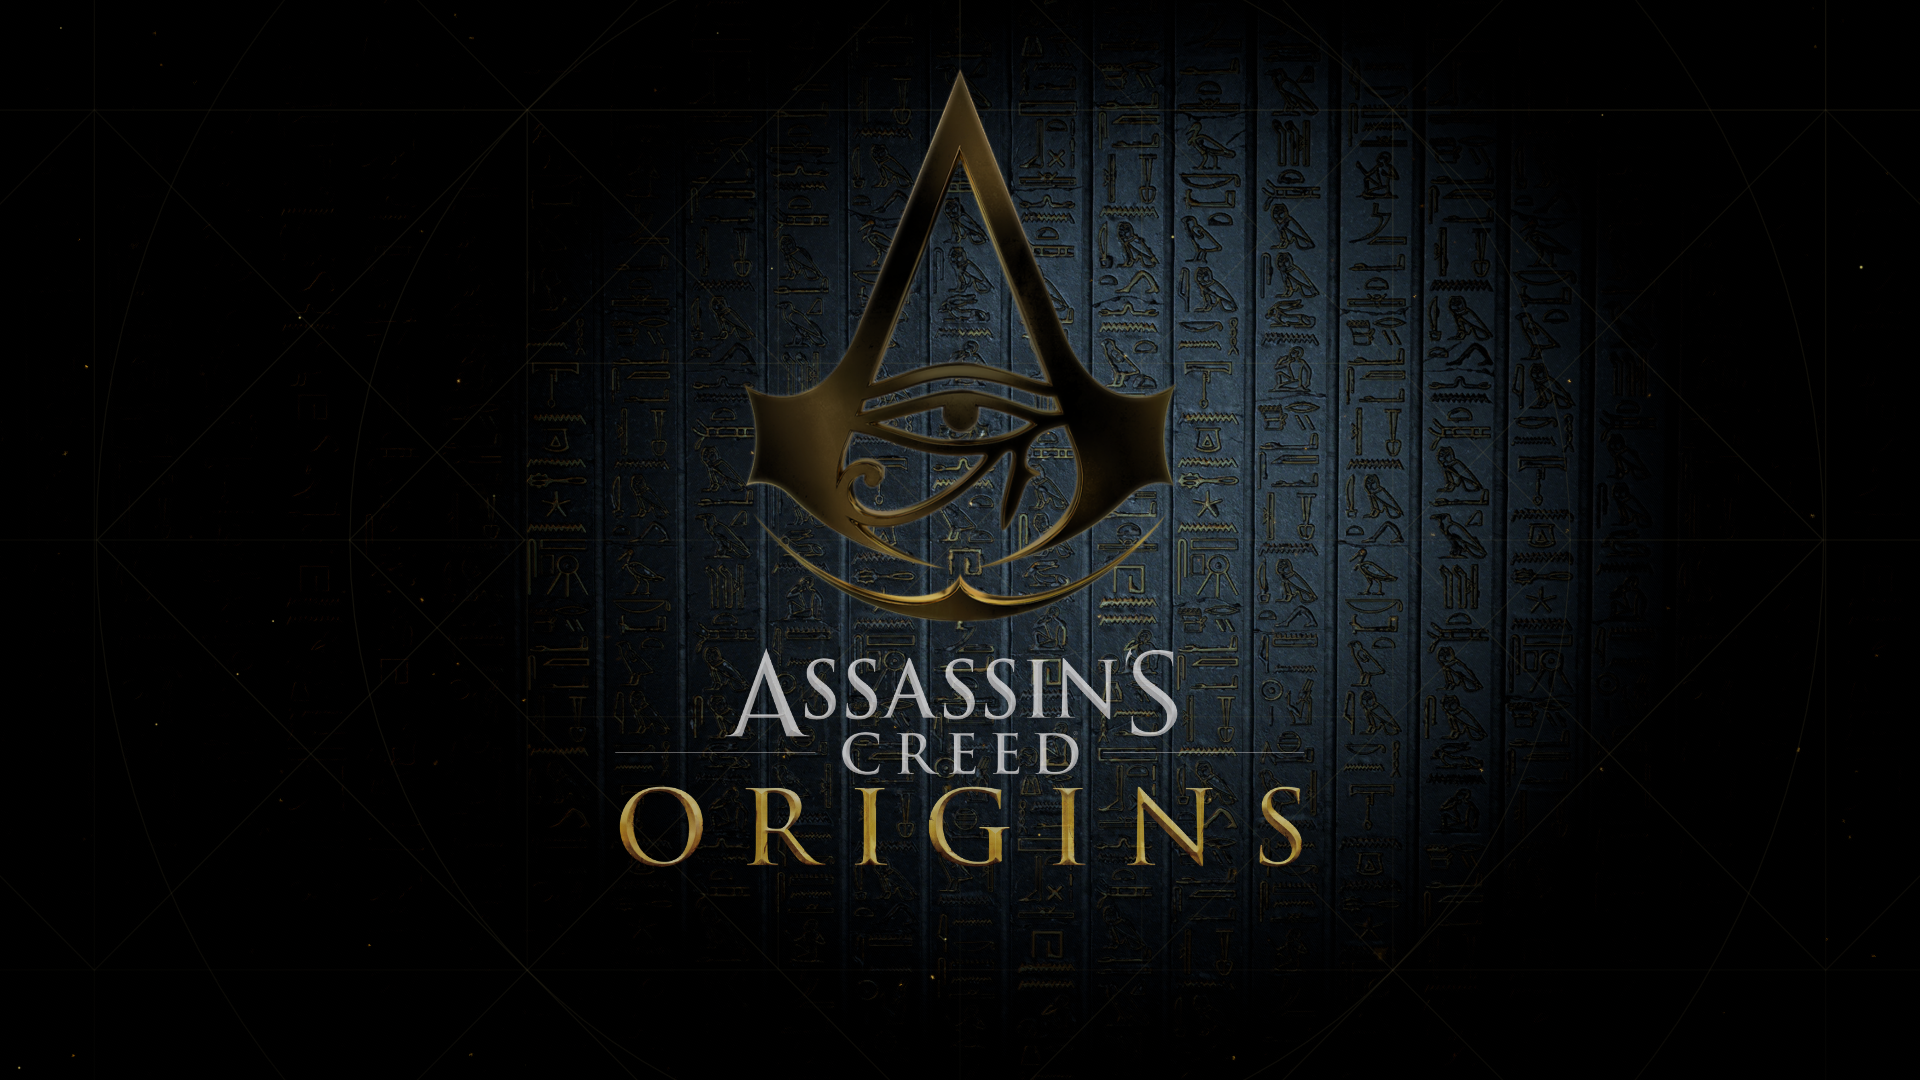 General 1920x1080 Origins Assassin's Creed Egypt 4Gamers gamer Ubisoft The Game (movie) game logo logo Assassin's Creed: Origins video games